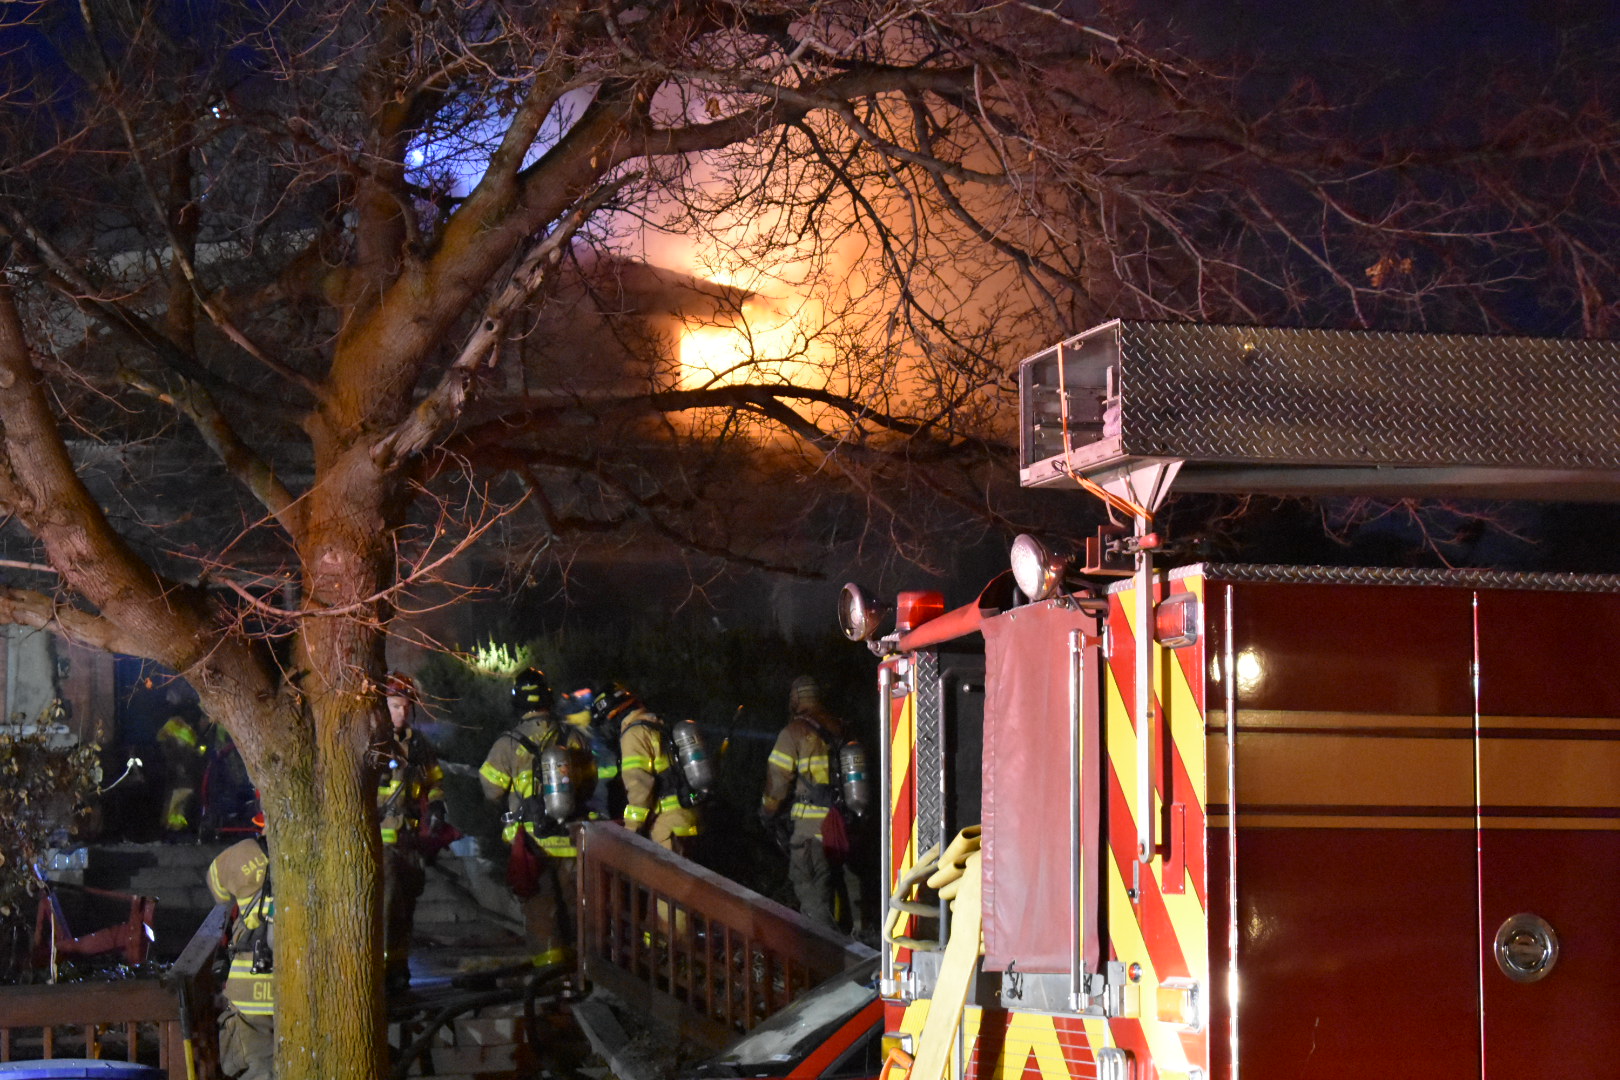 Update: Woman suffers burns, severe smoke inhalation in Salt Lake City house fire - Gephardt Daily